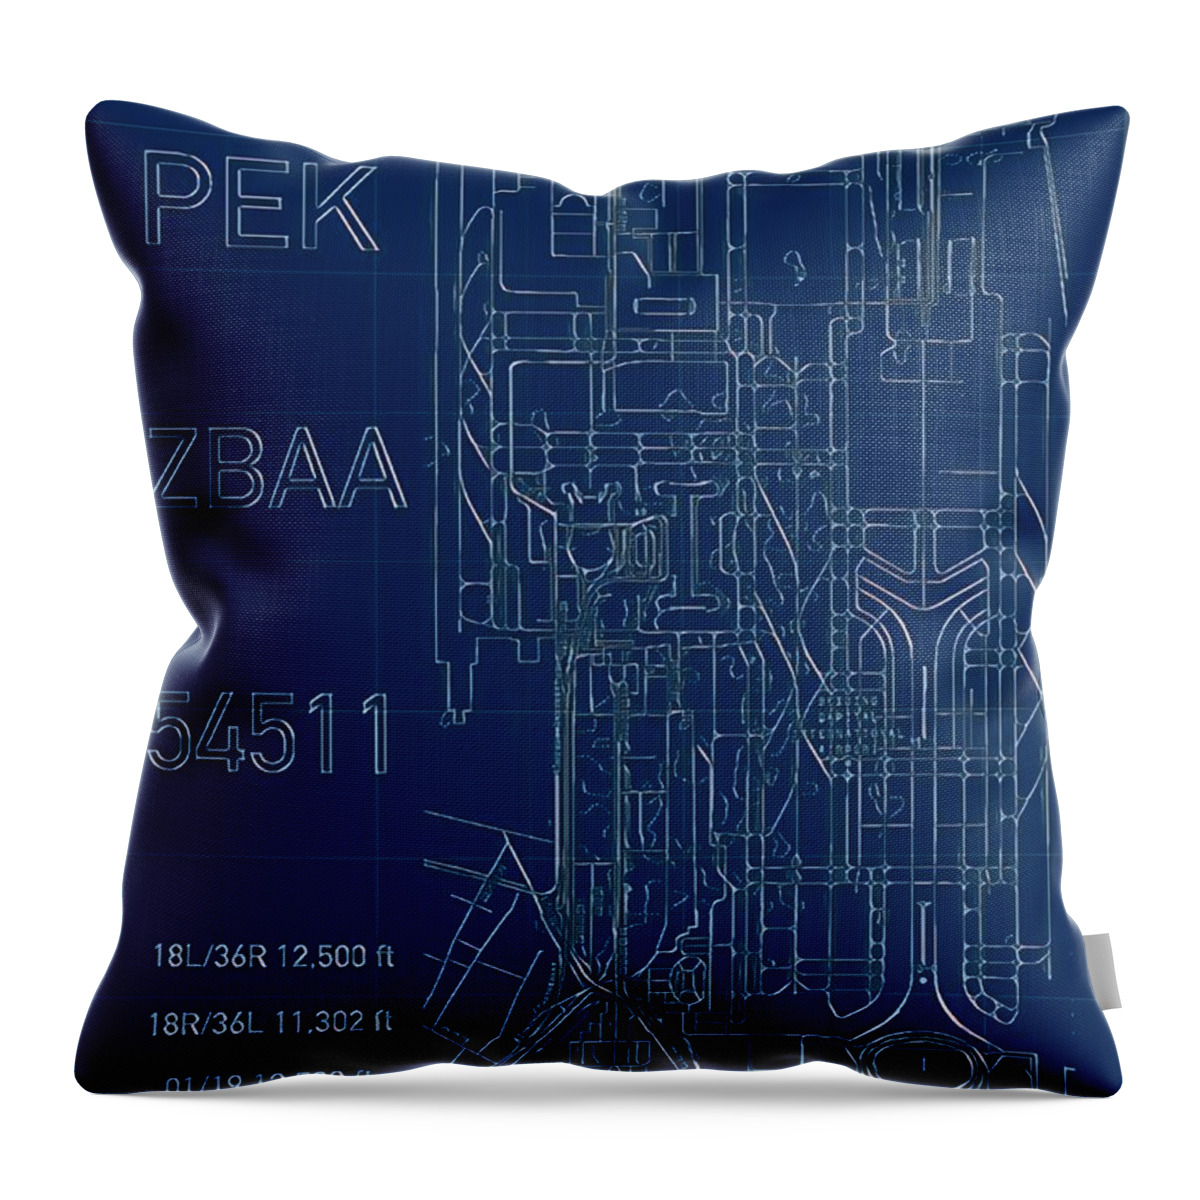 Pek Throw Pillow featuring the digital art PEK Beijing Capital Airport Blueprint by HELGE Art Gallery